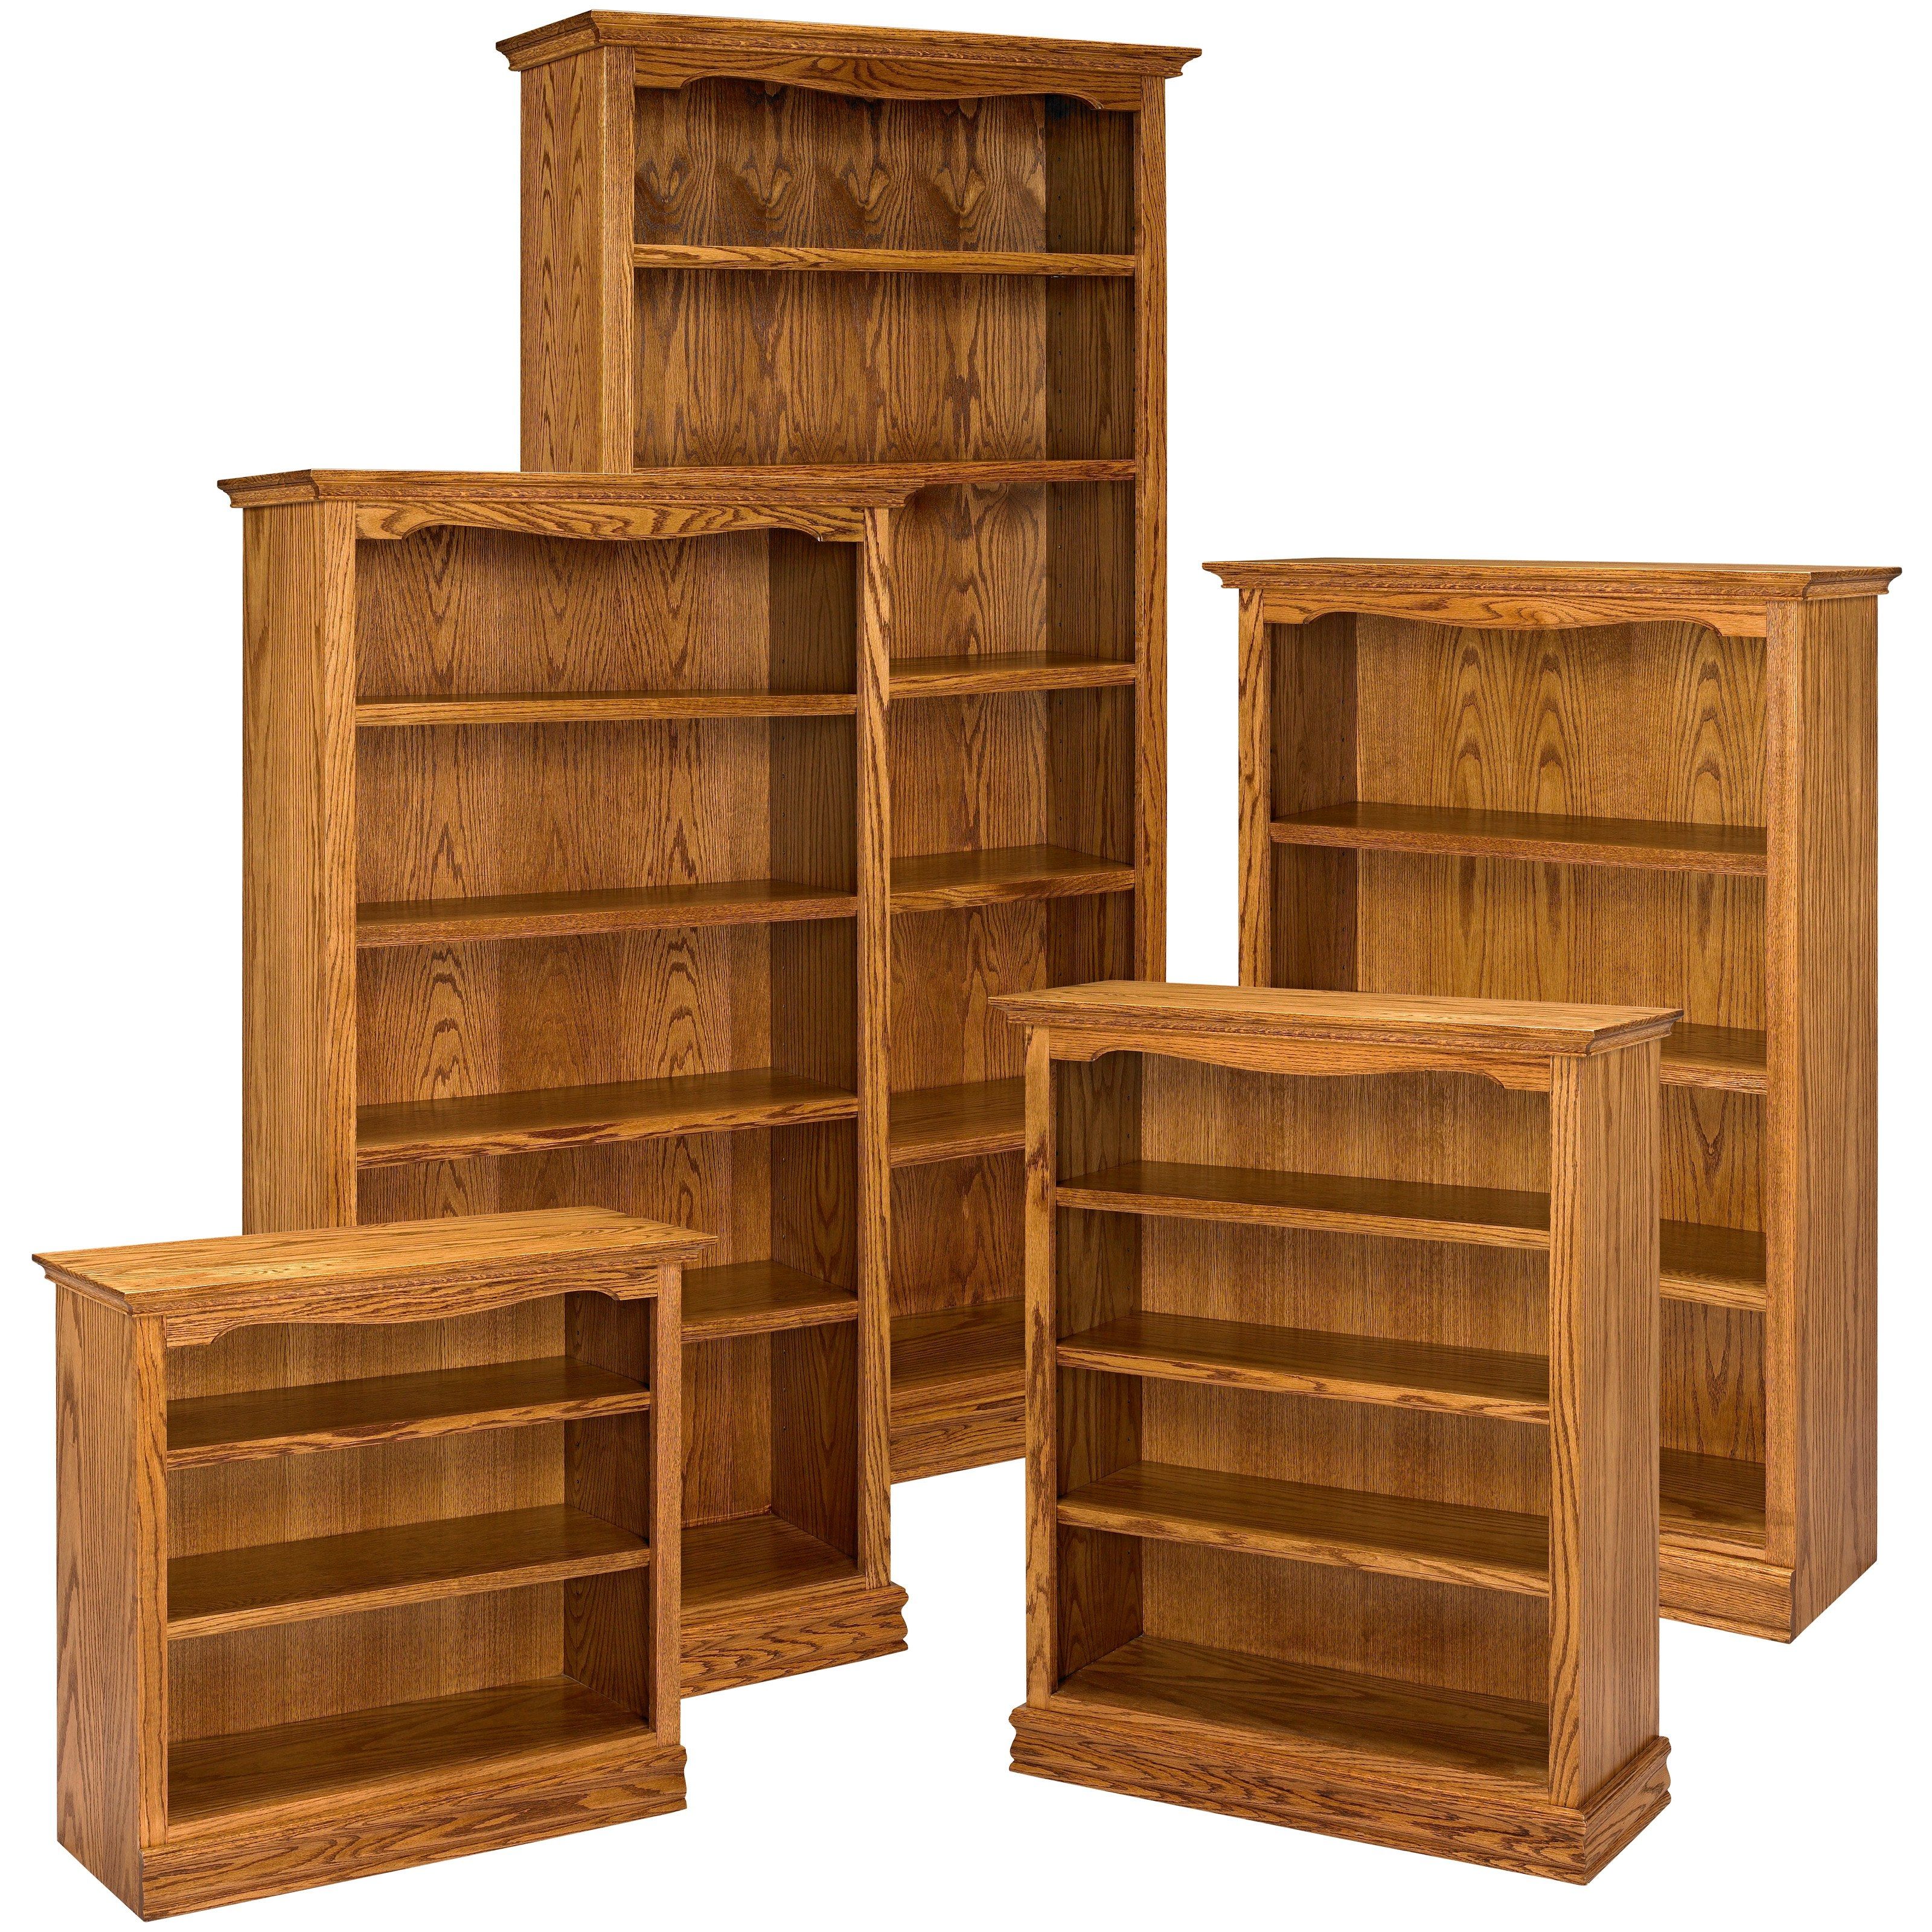 A E Solid Oak Americana Wood Bookcase Bookcases At Hayneedle Regarding Solid Oak Bookcase (Photo 11 of 15)